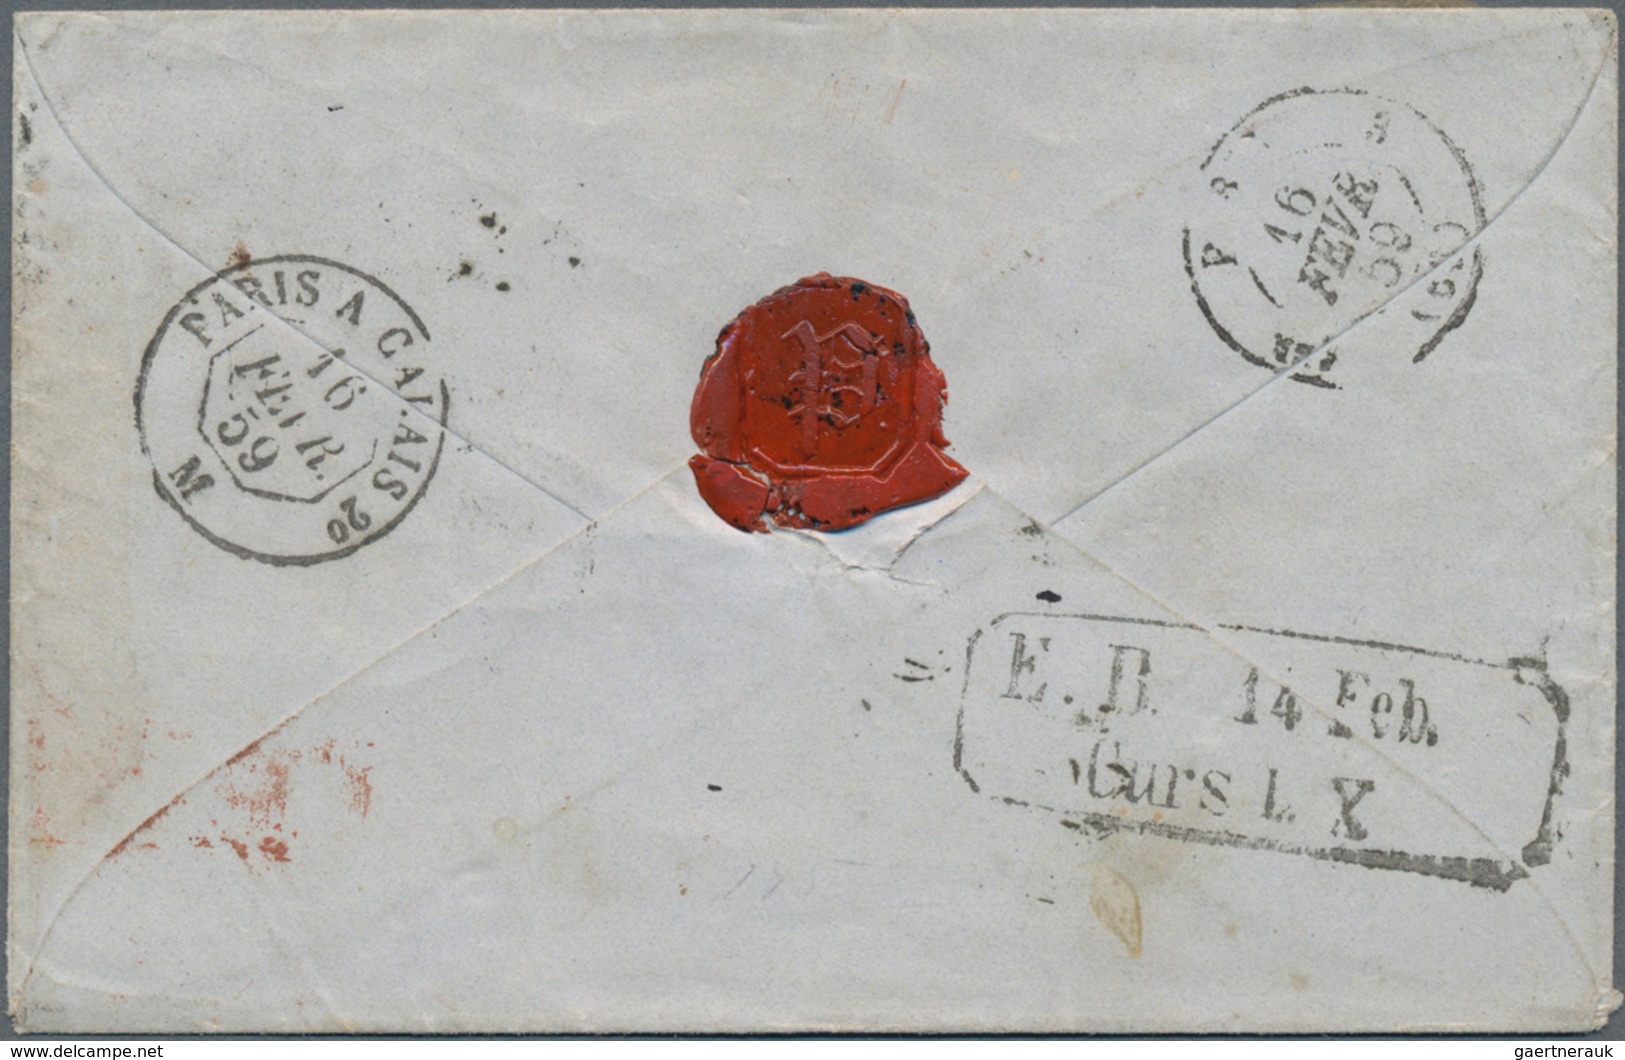 Portugal - Madeira - Funchal: 1859, Small Envelope Incoming From Germany "HEIDELBERG 14. Feb." Via E - Funchal